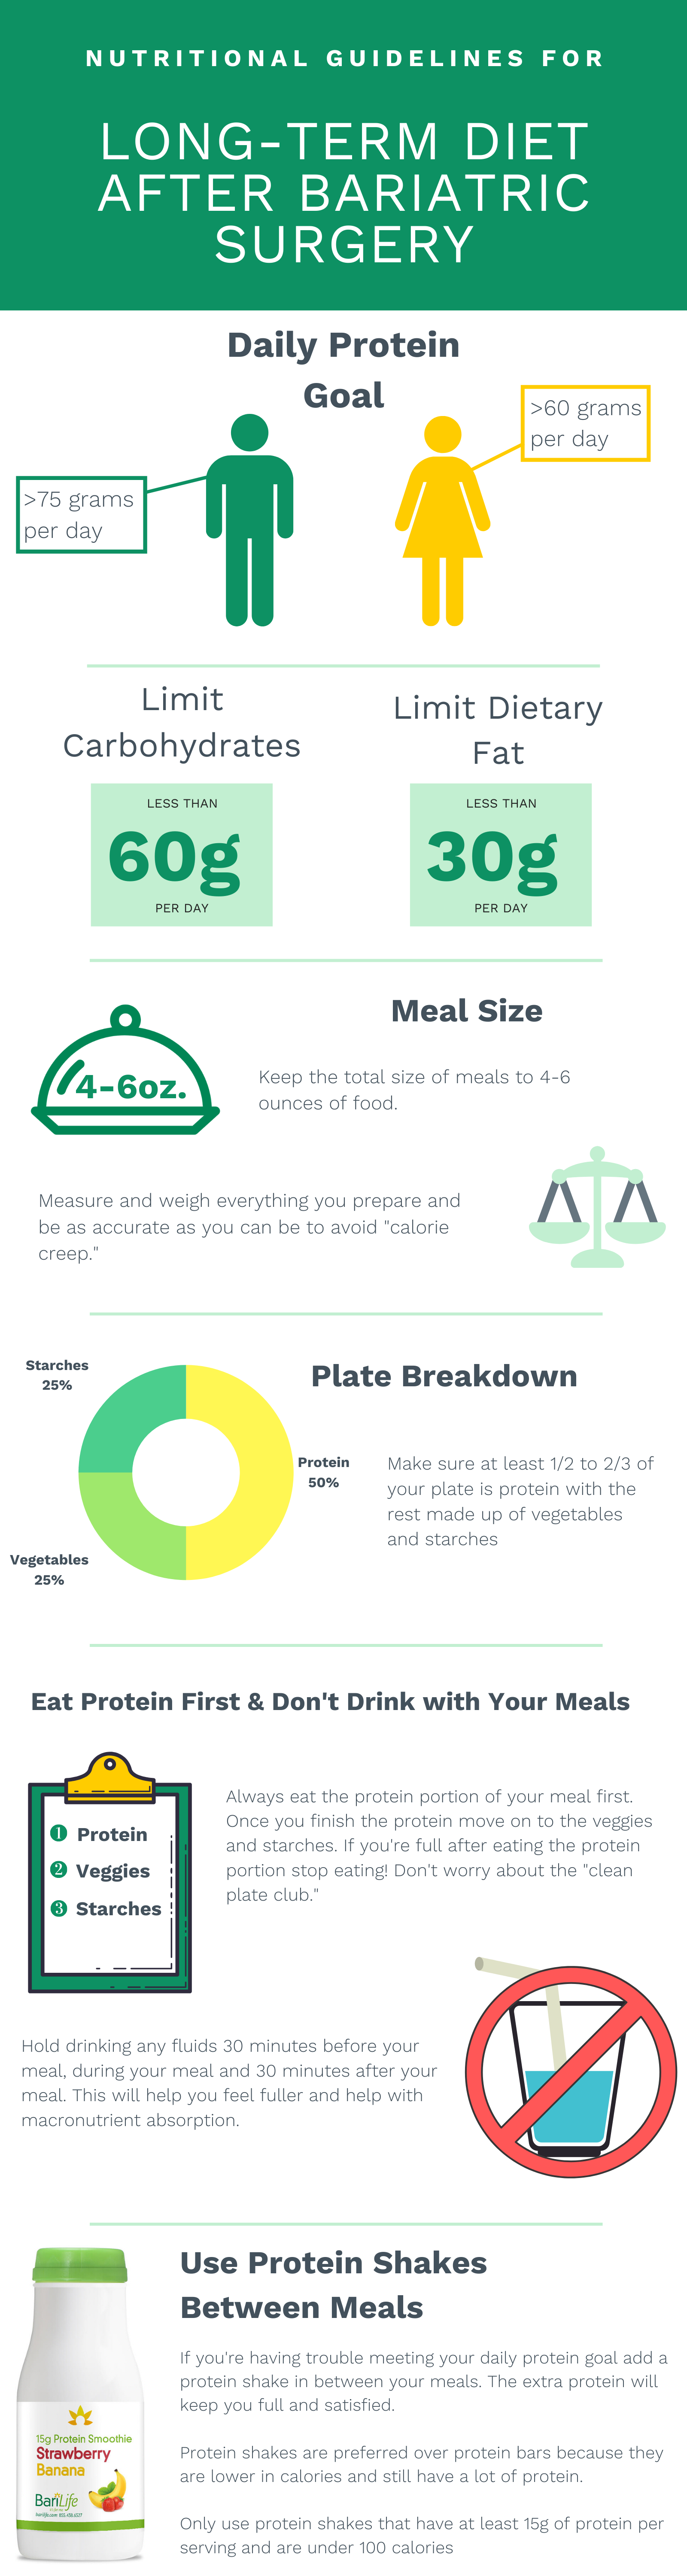 https://www.barilife.com/wp-content/uploads/2019/10/Long-Term-Diet-Infographic-1.png